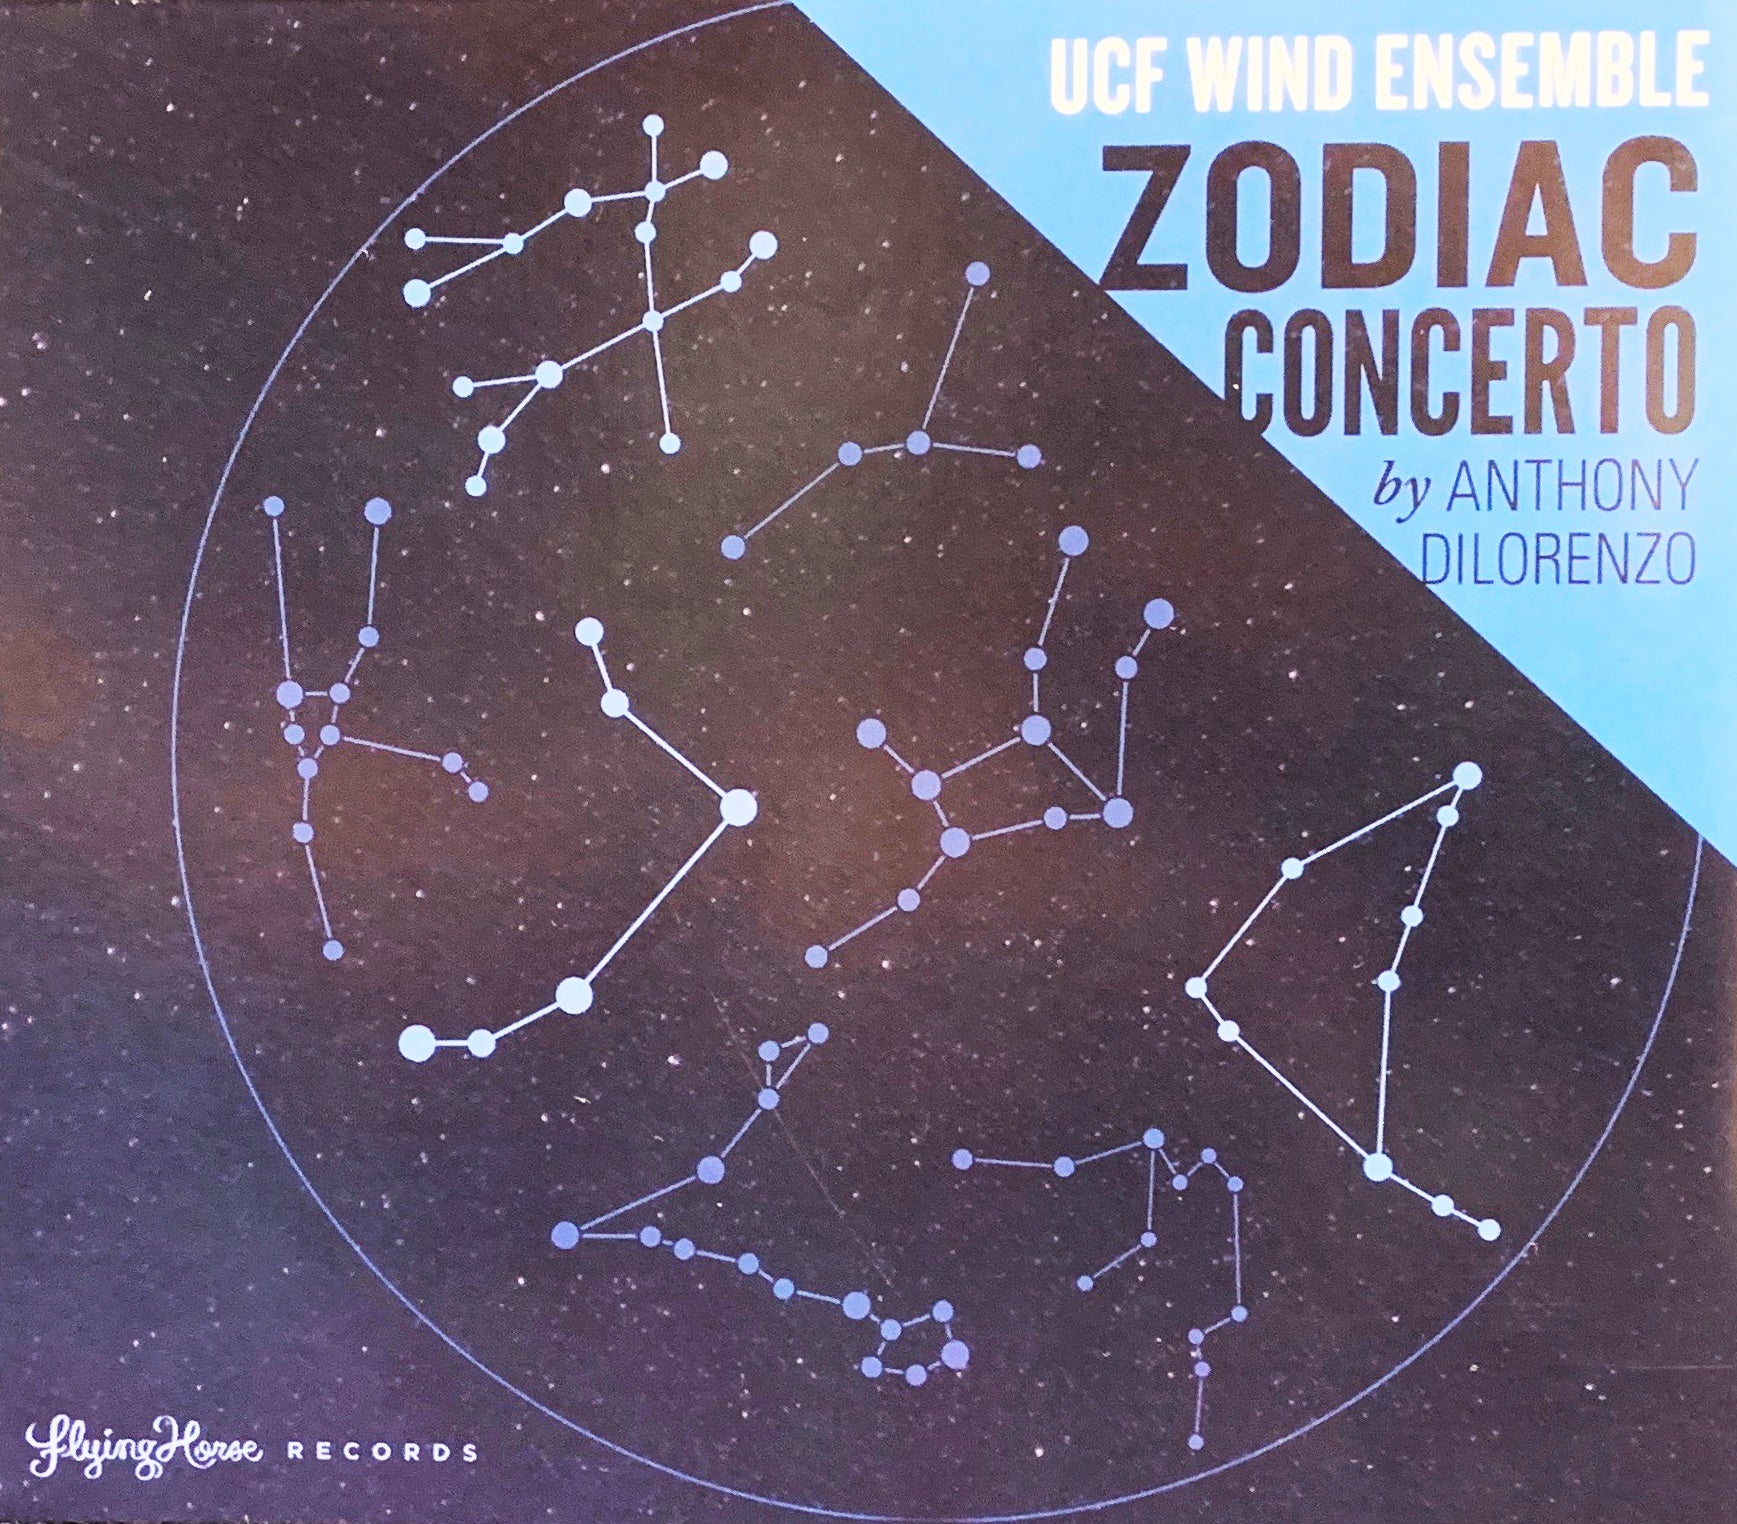 UCF Wind Ensemble (Zodiac Concerto) CD